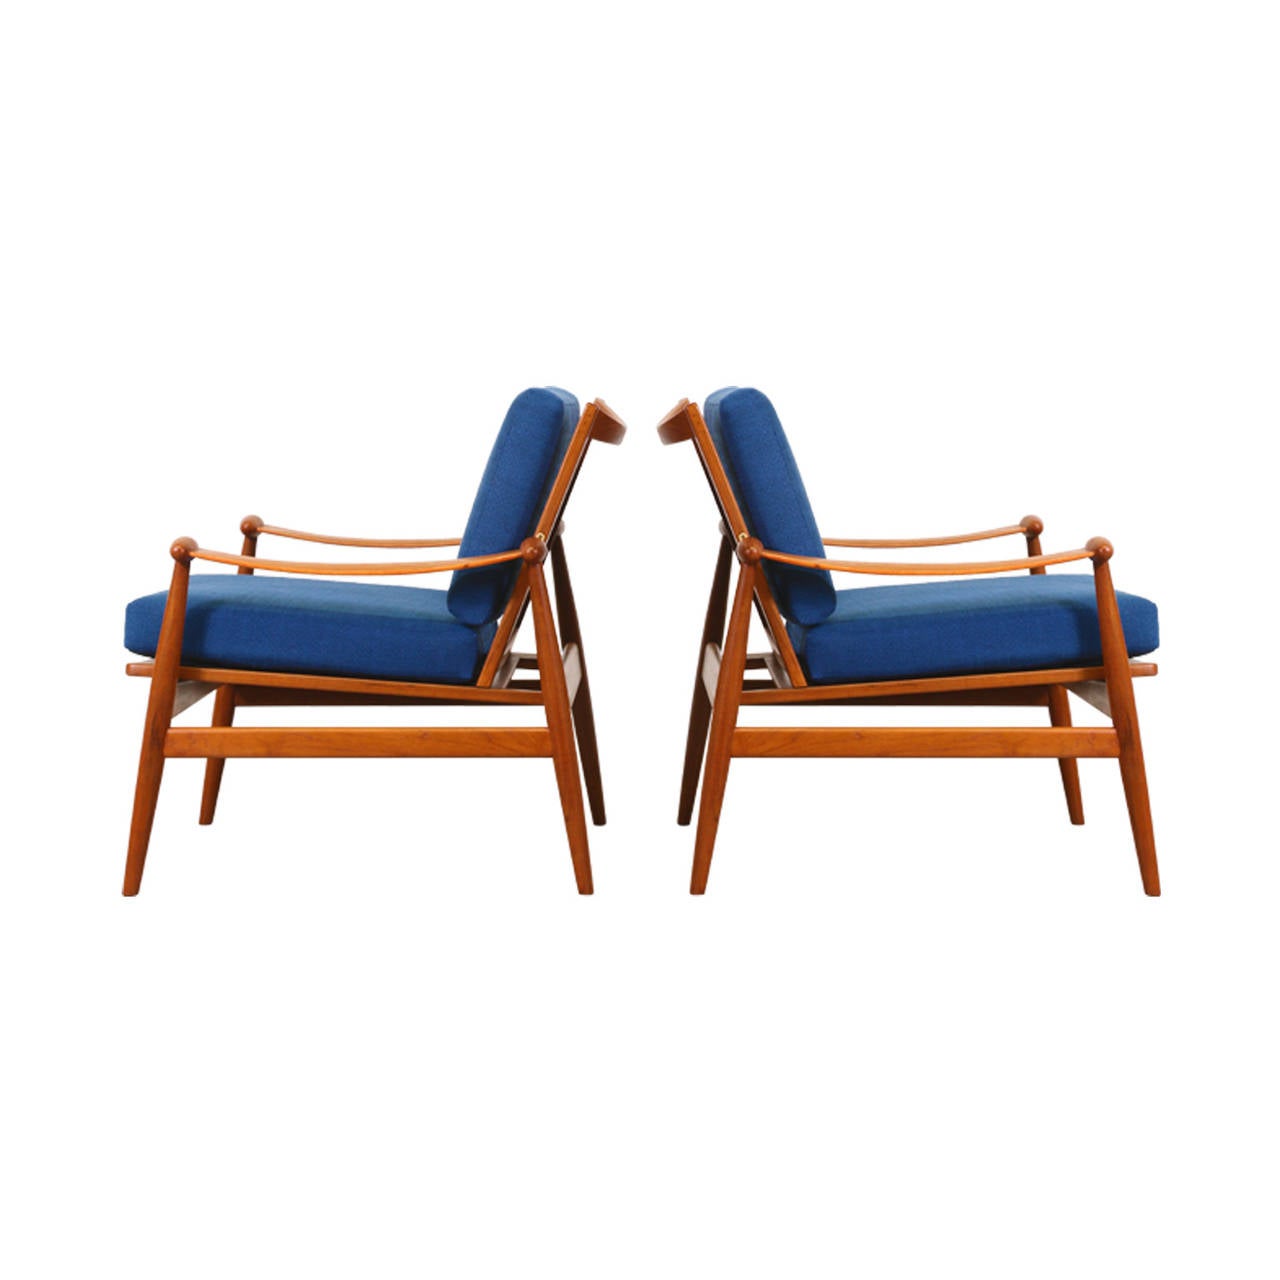 Finn Juhl model #133 “Spade” teak lounge chairs for France & Son.